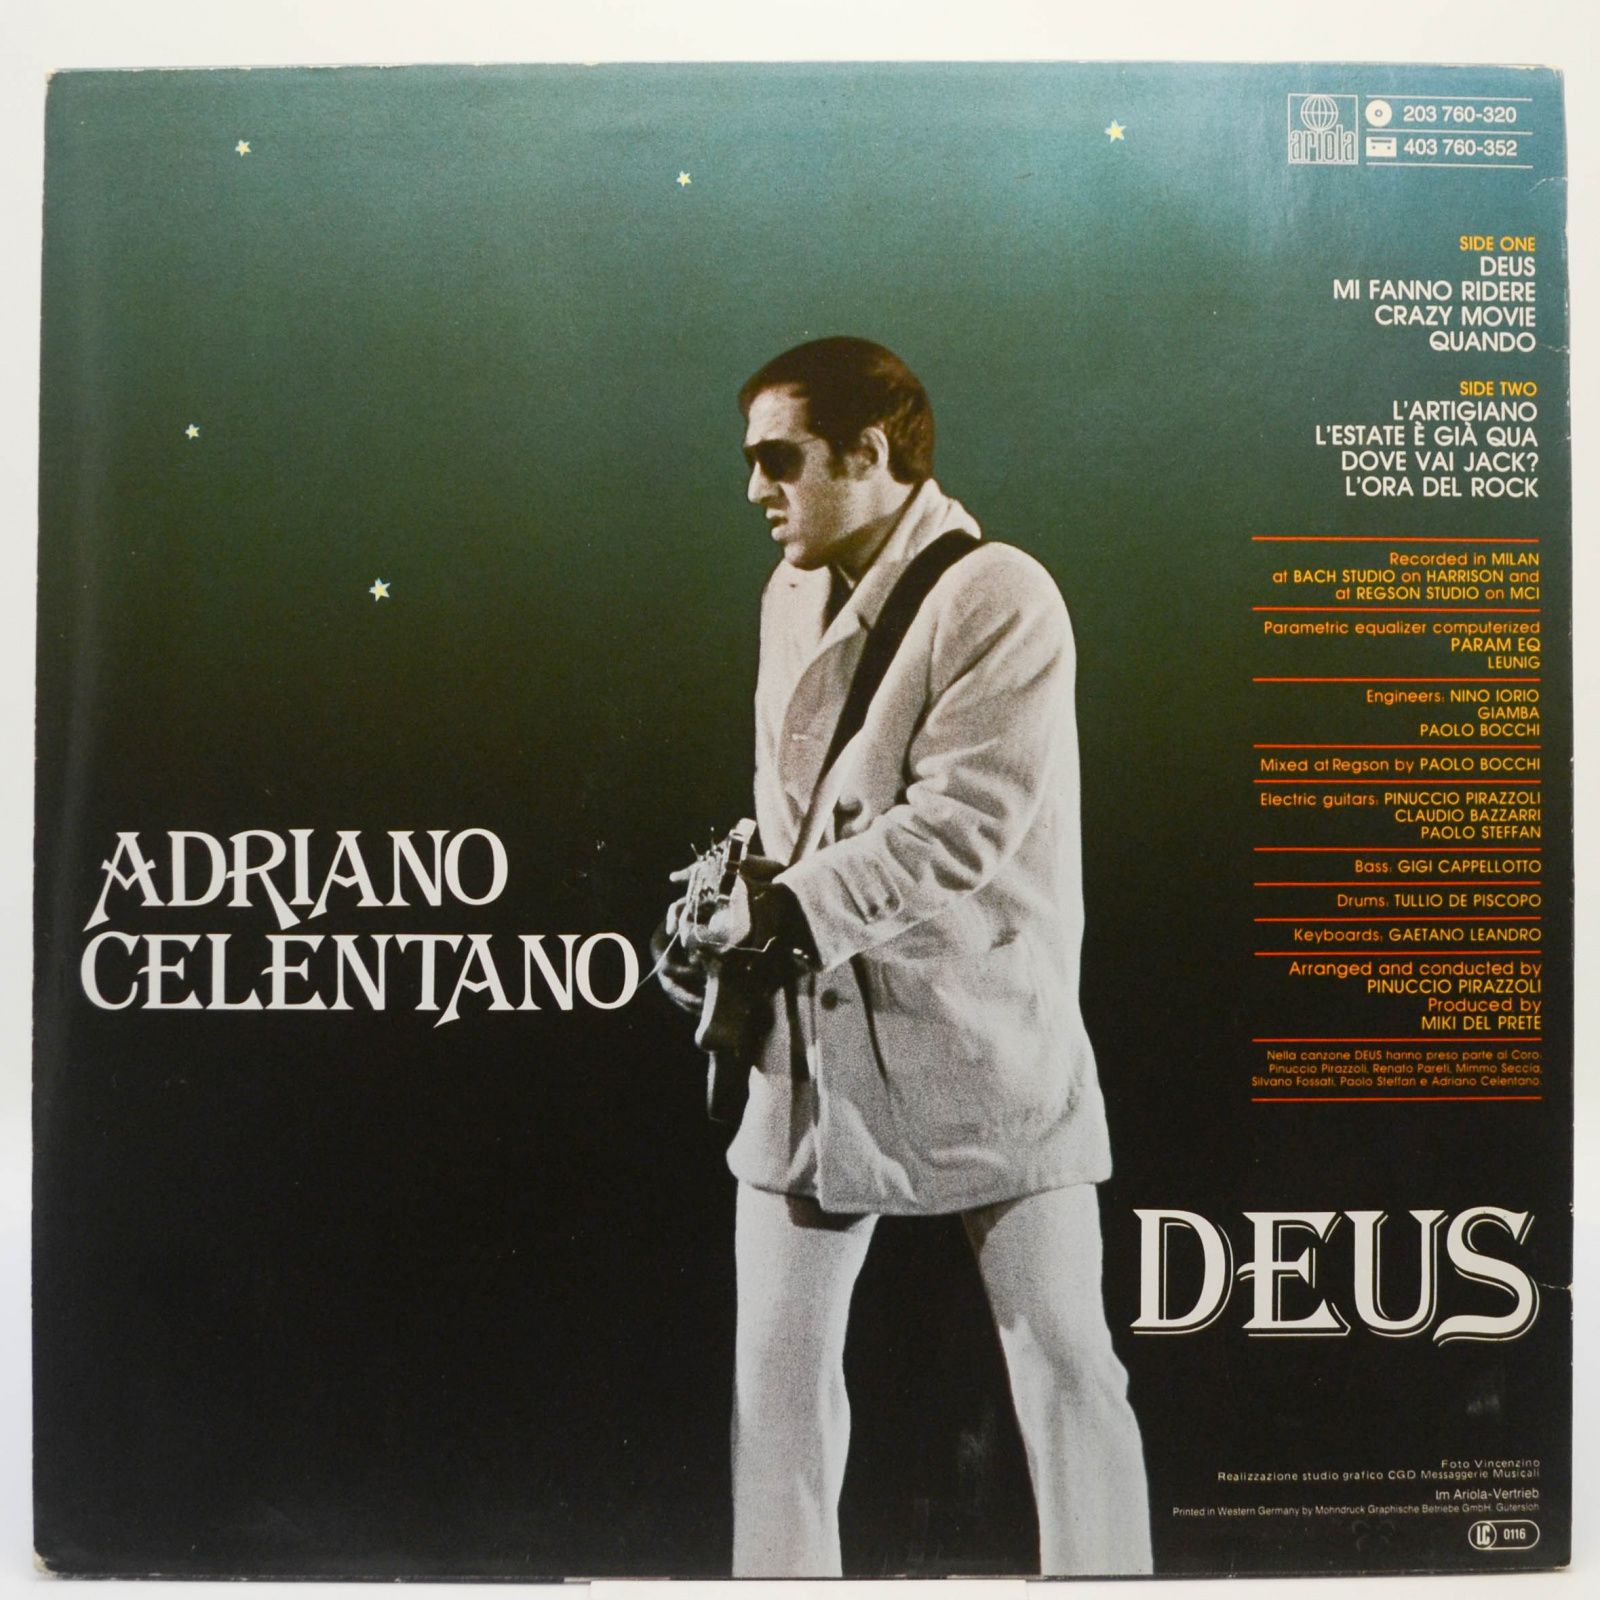 Adriano Celentano — Deus, 1981